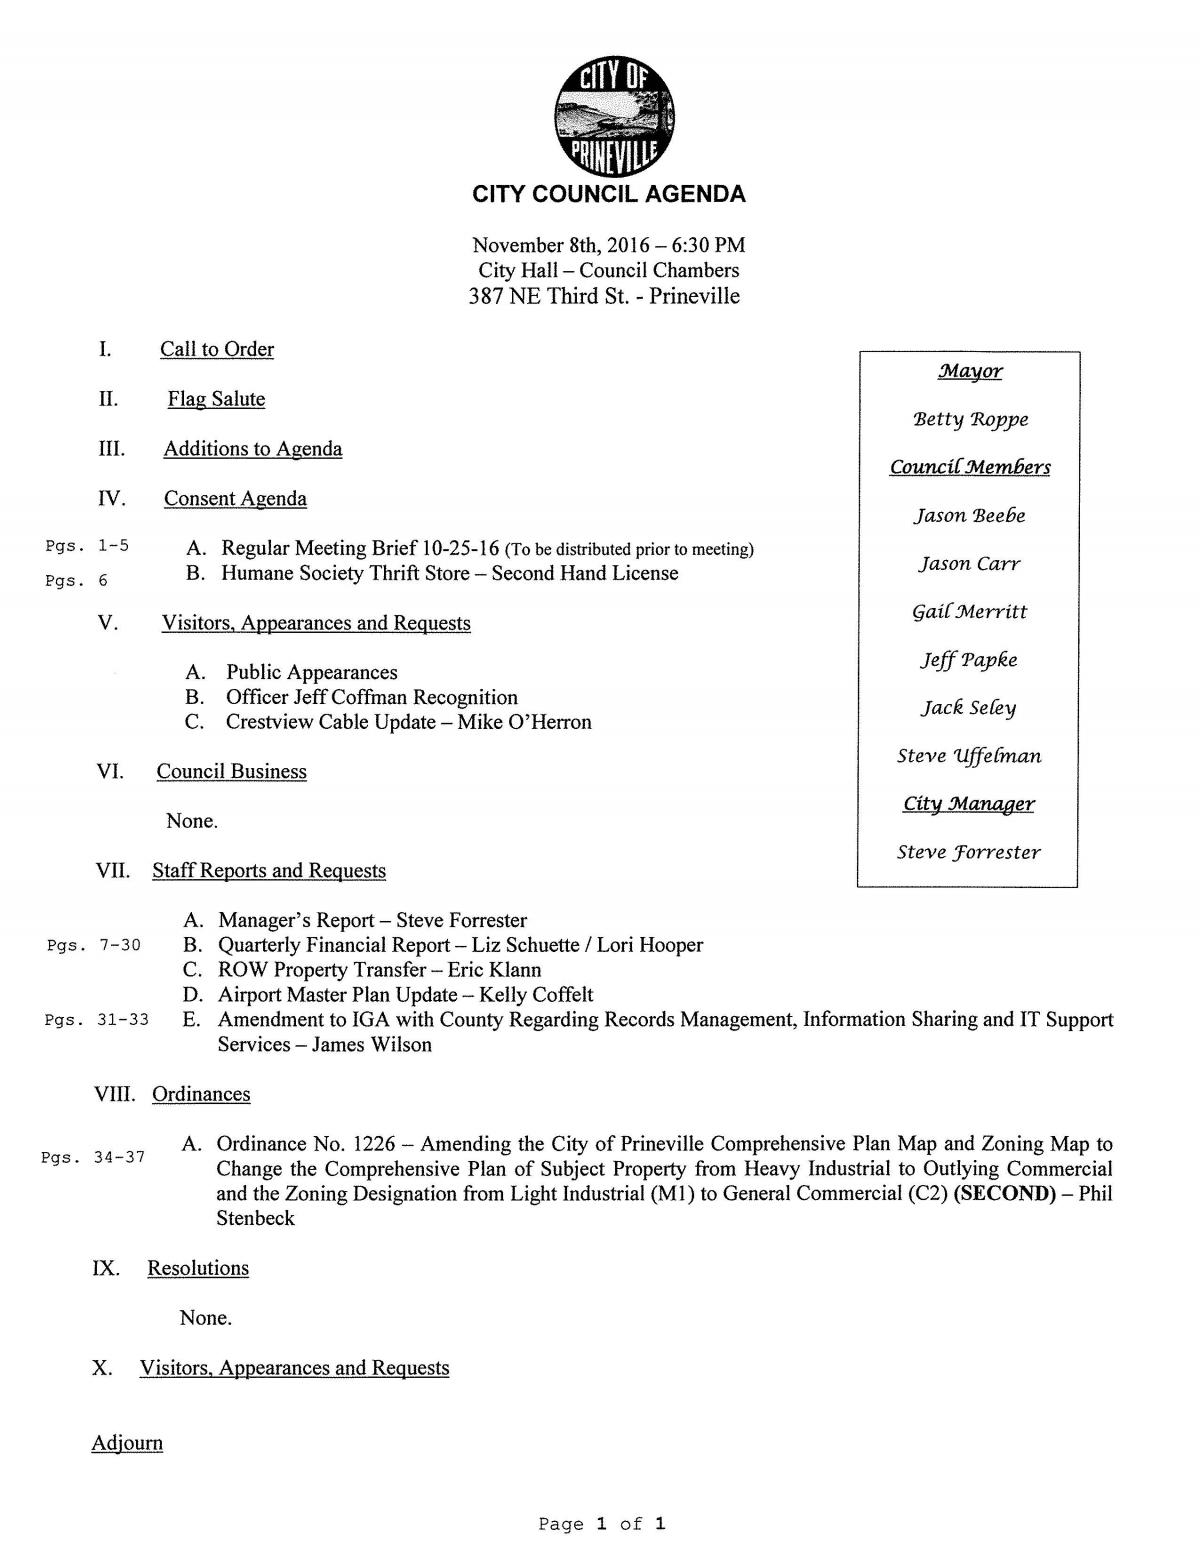 Council Agenda 11-08-16